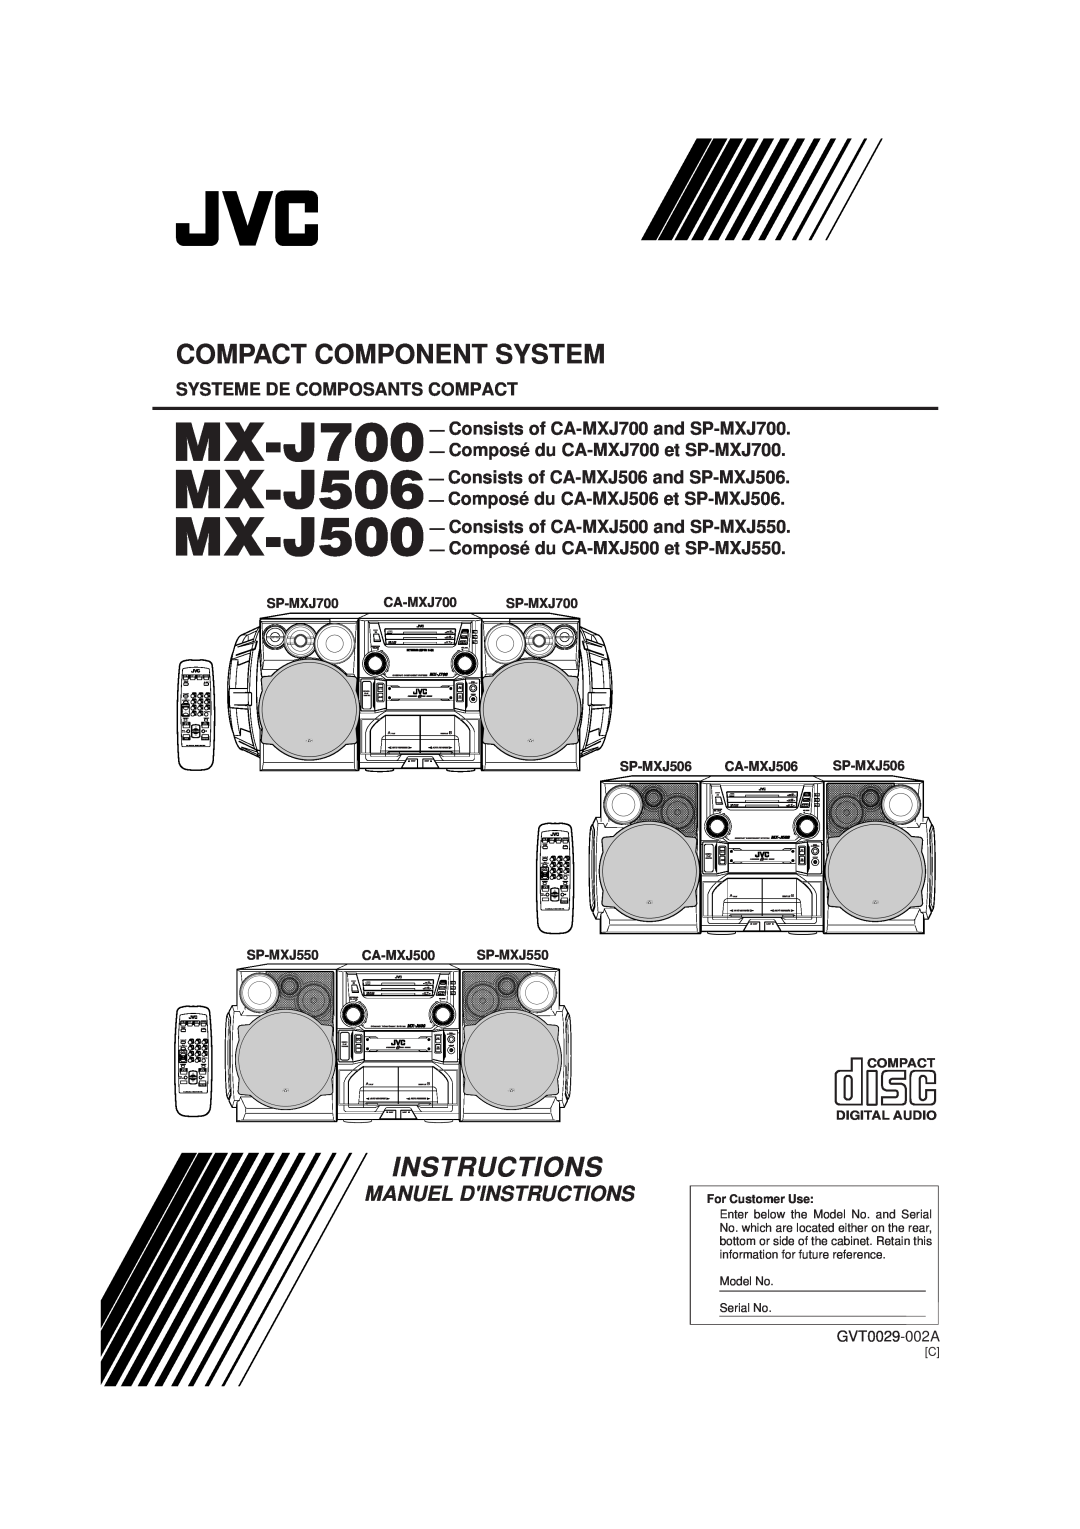 JVC MX-J500 manual Instructions, Compact Component System, Manuel Dinstructions 